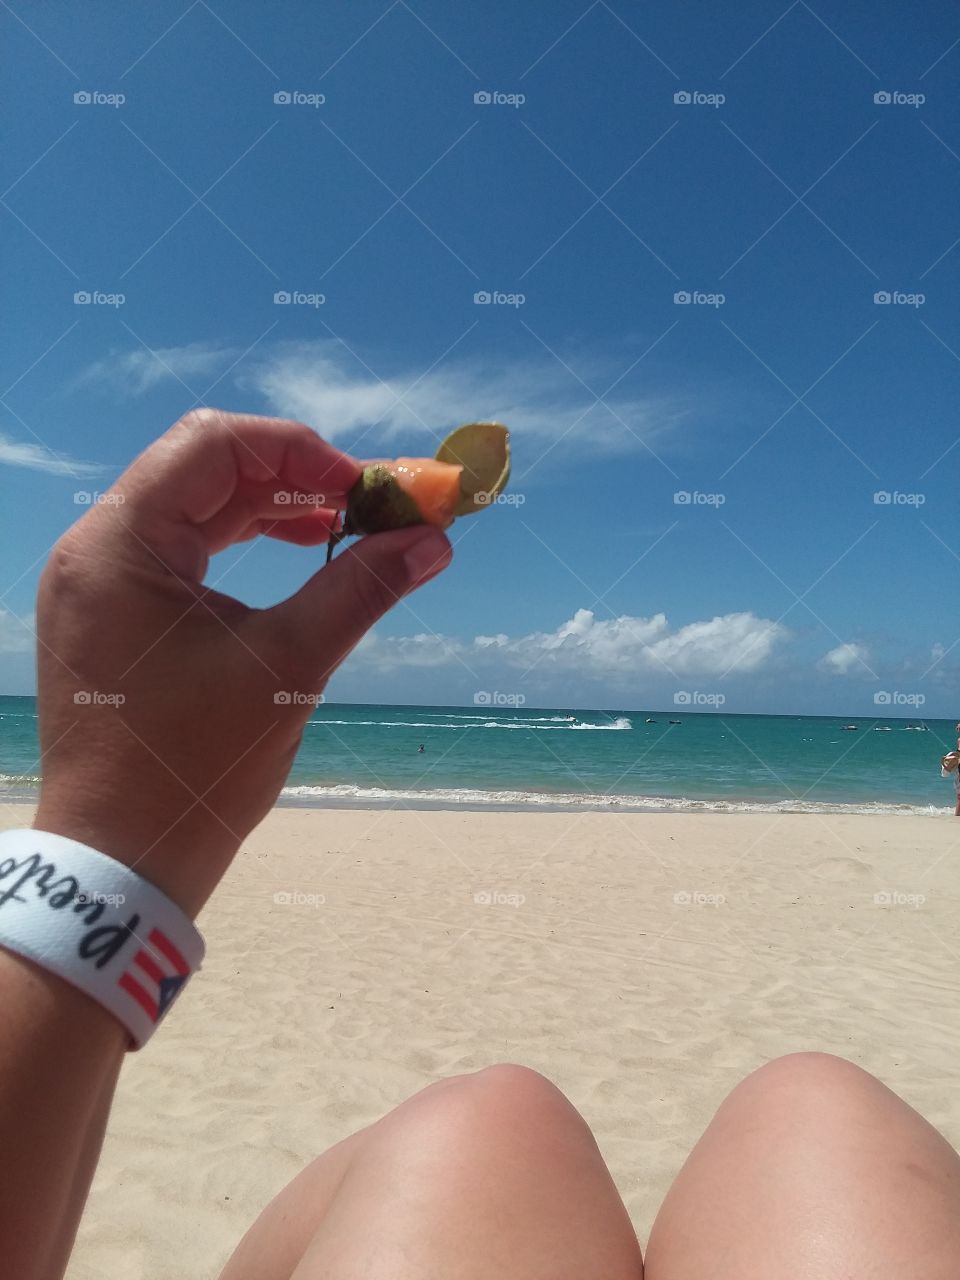 Relaxing eating a quenepa treat in Puerto Rico beach